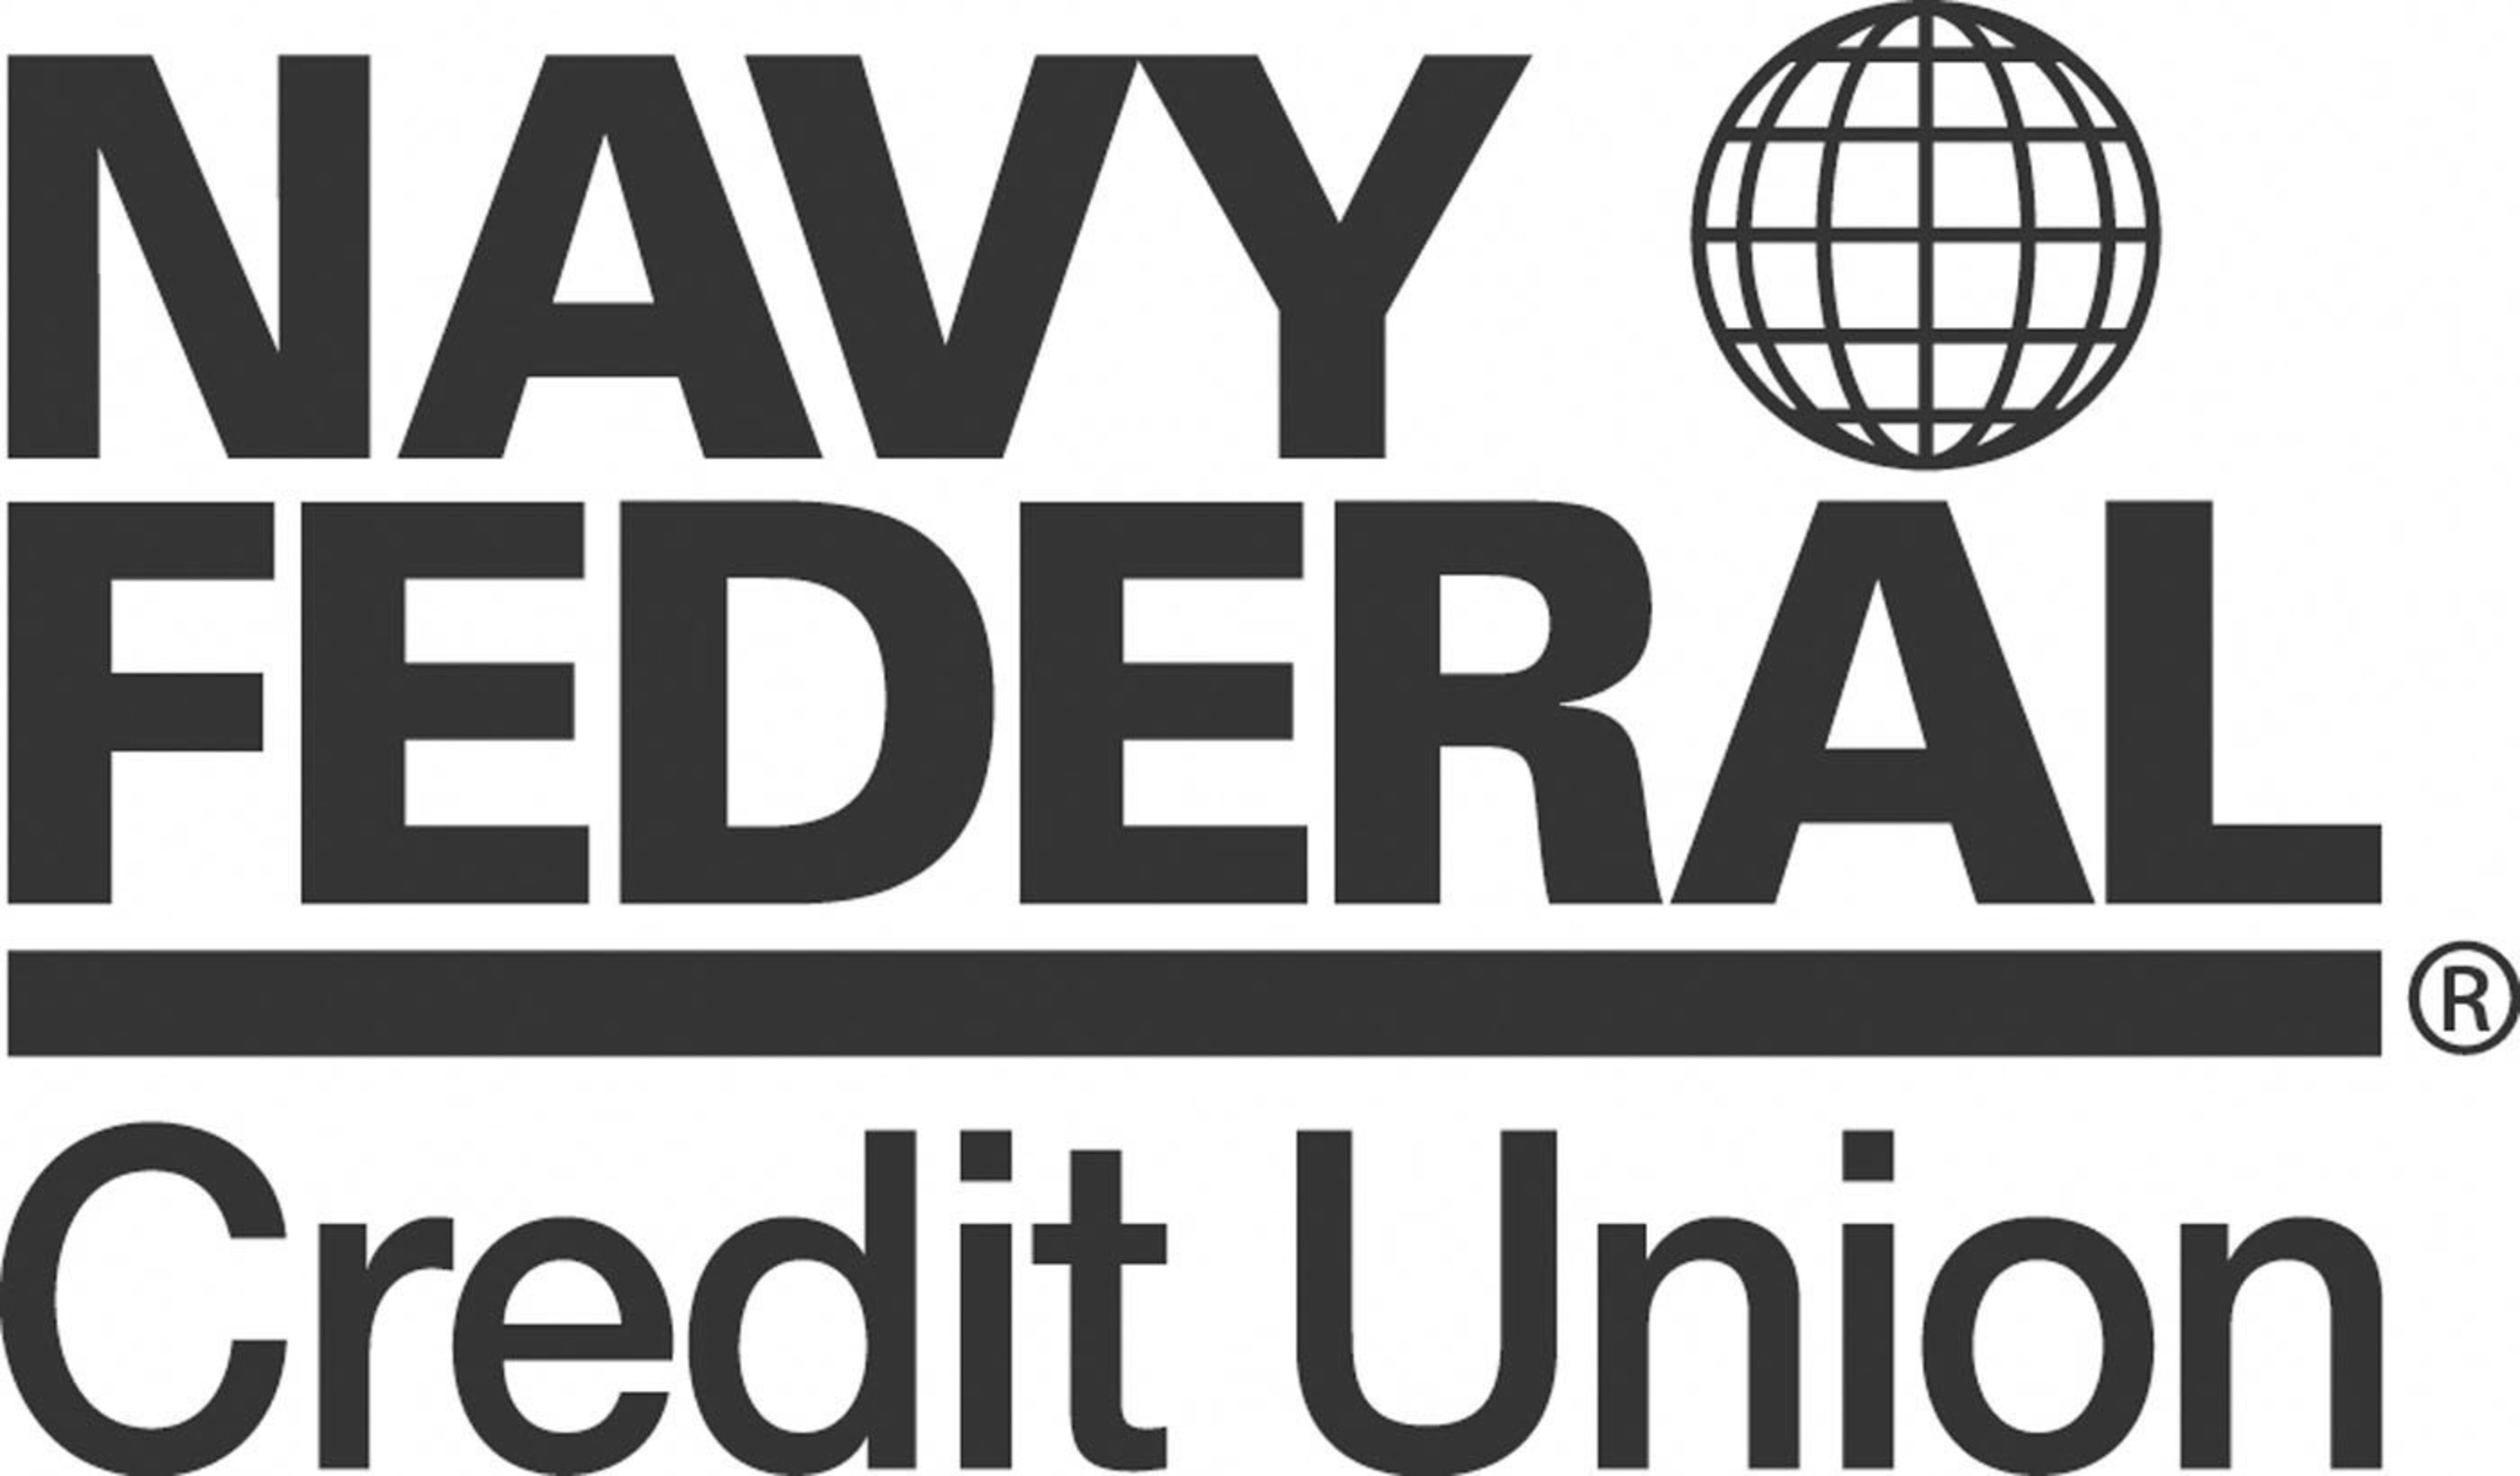 Navy Federal Credit Union Logo. (PRNewsFoto/Navy Federal Credit Union)